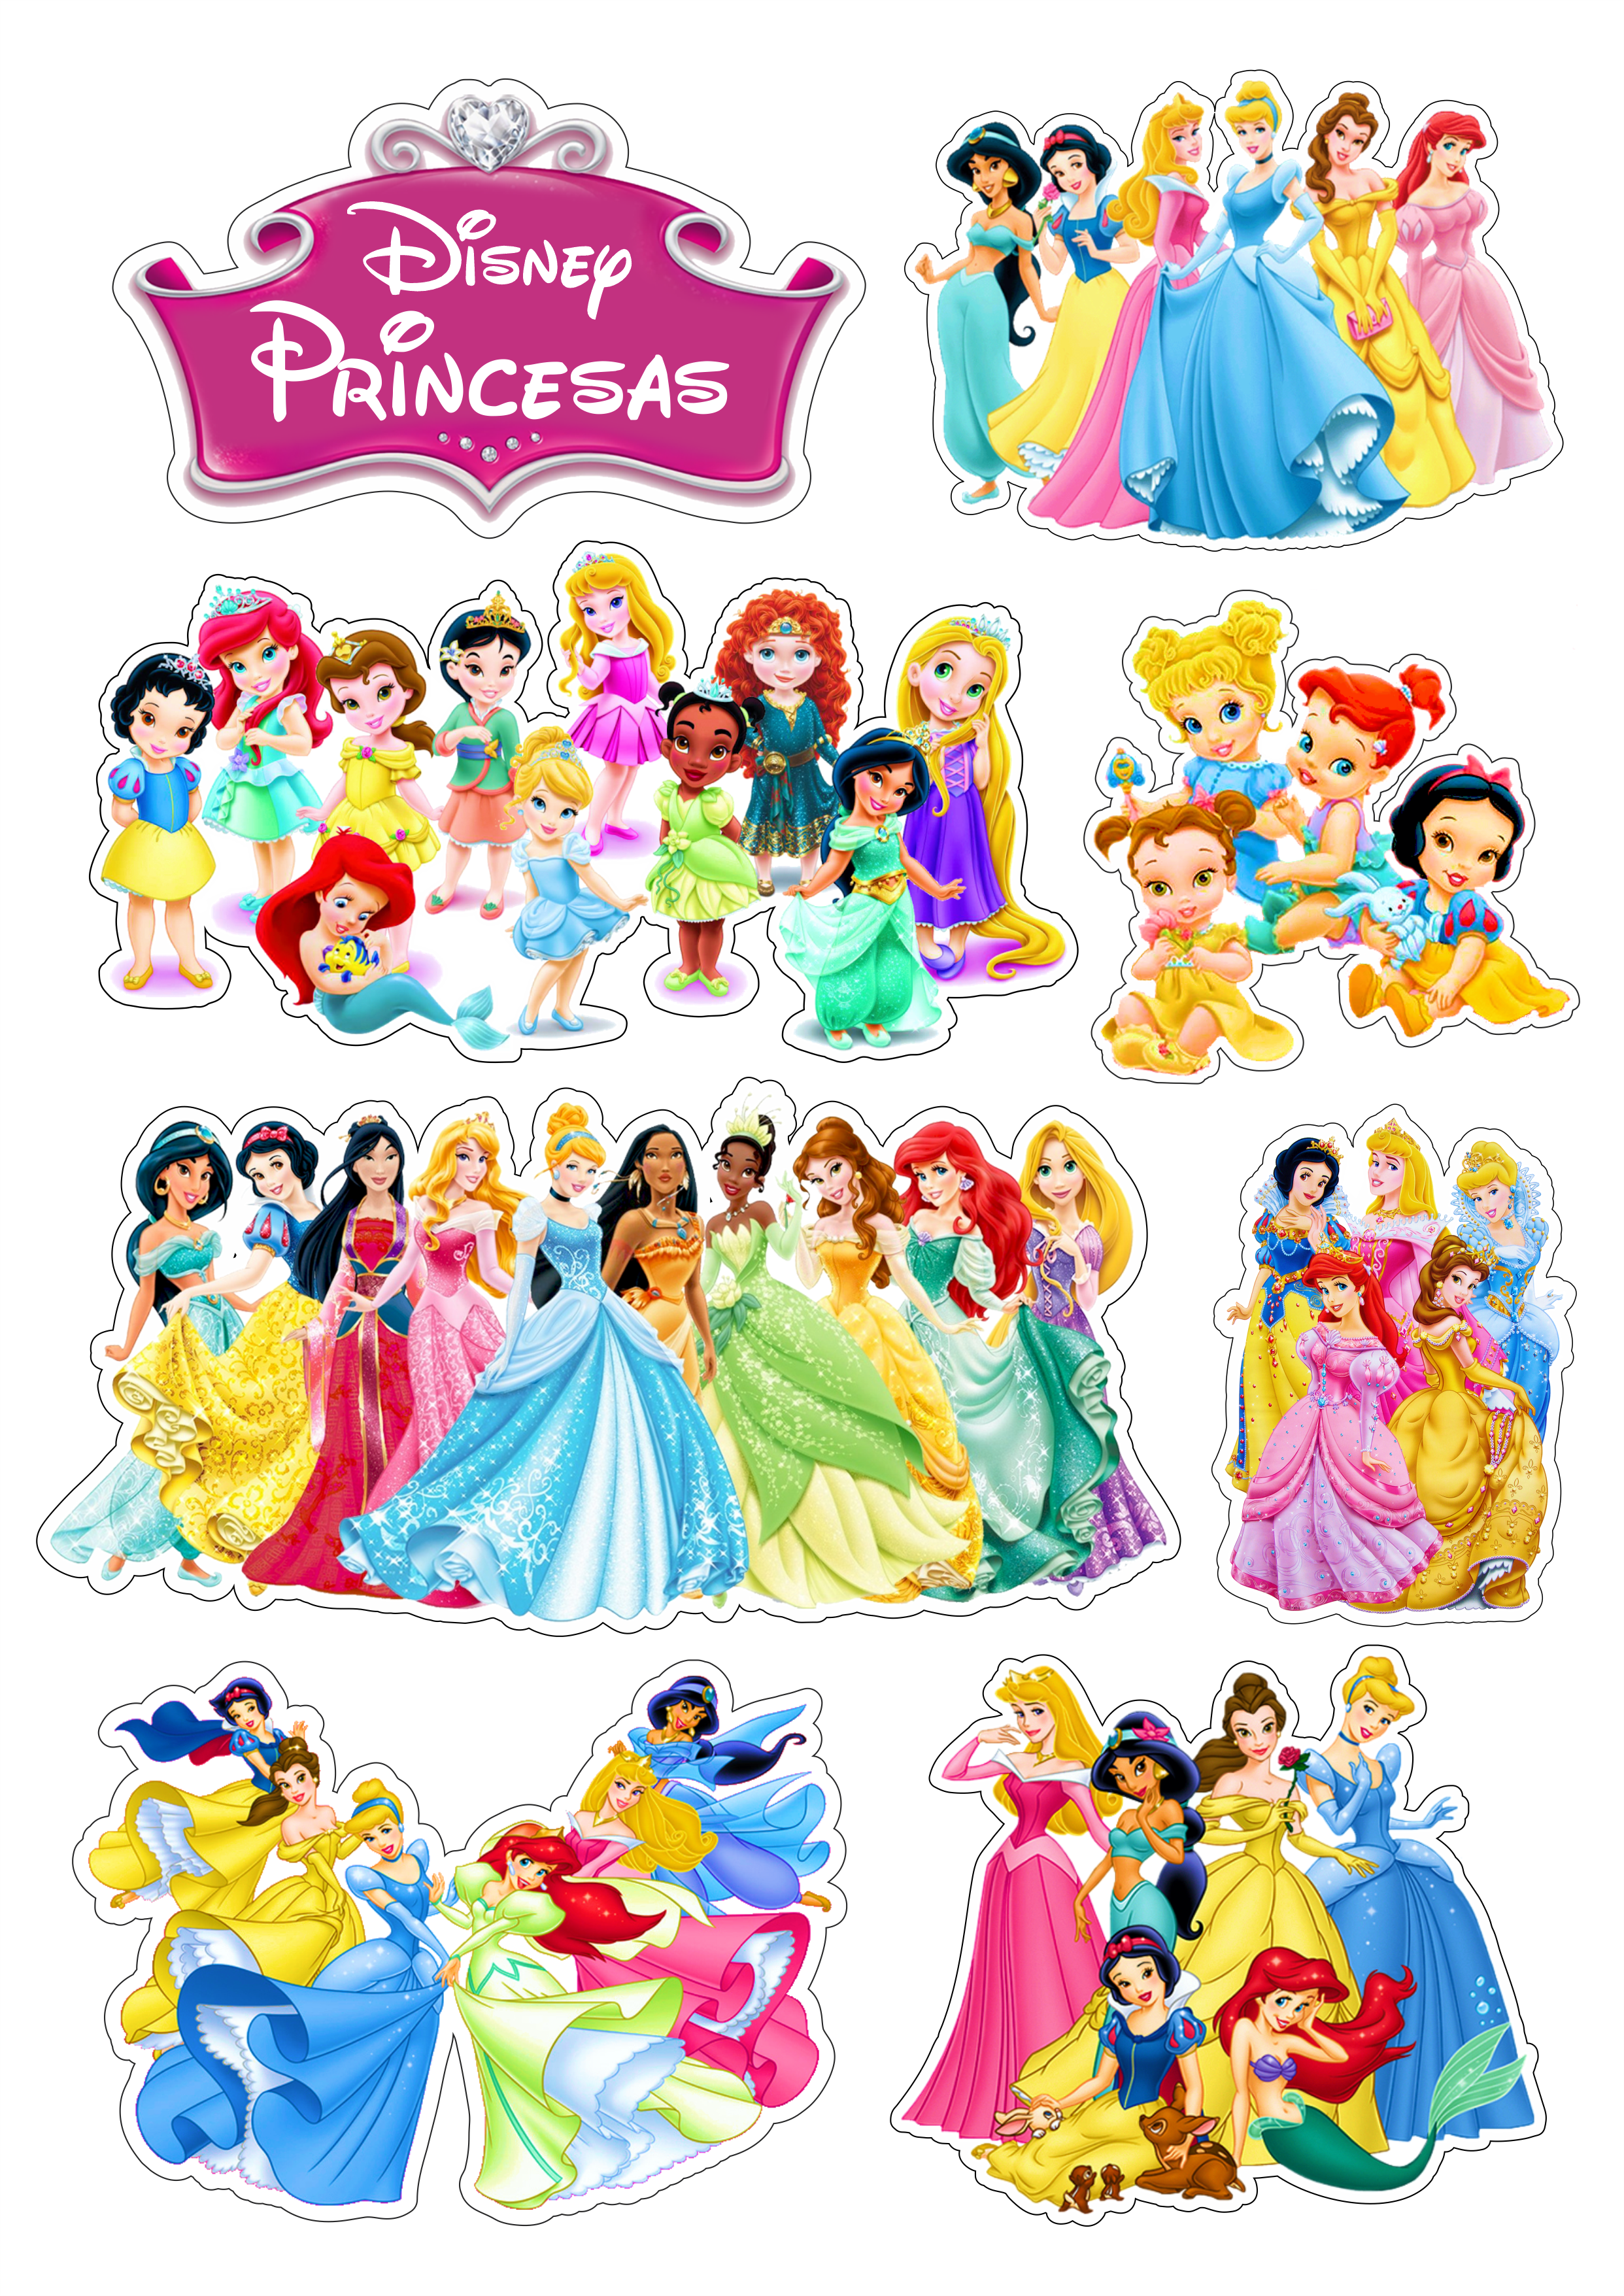 ESPECIAL} Pintar Desenho das Princesas Ariel Cinderela Tiana e Mulan 